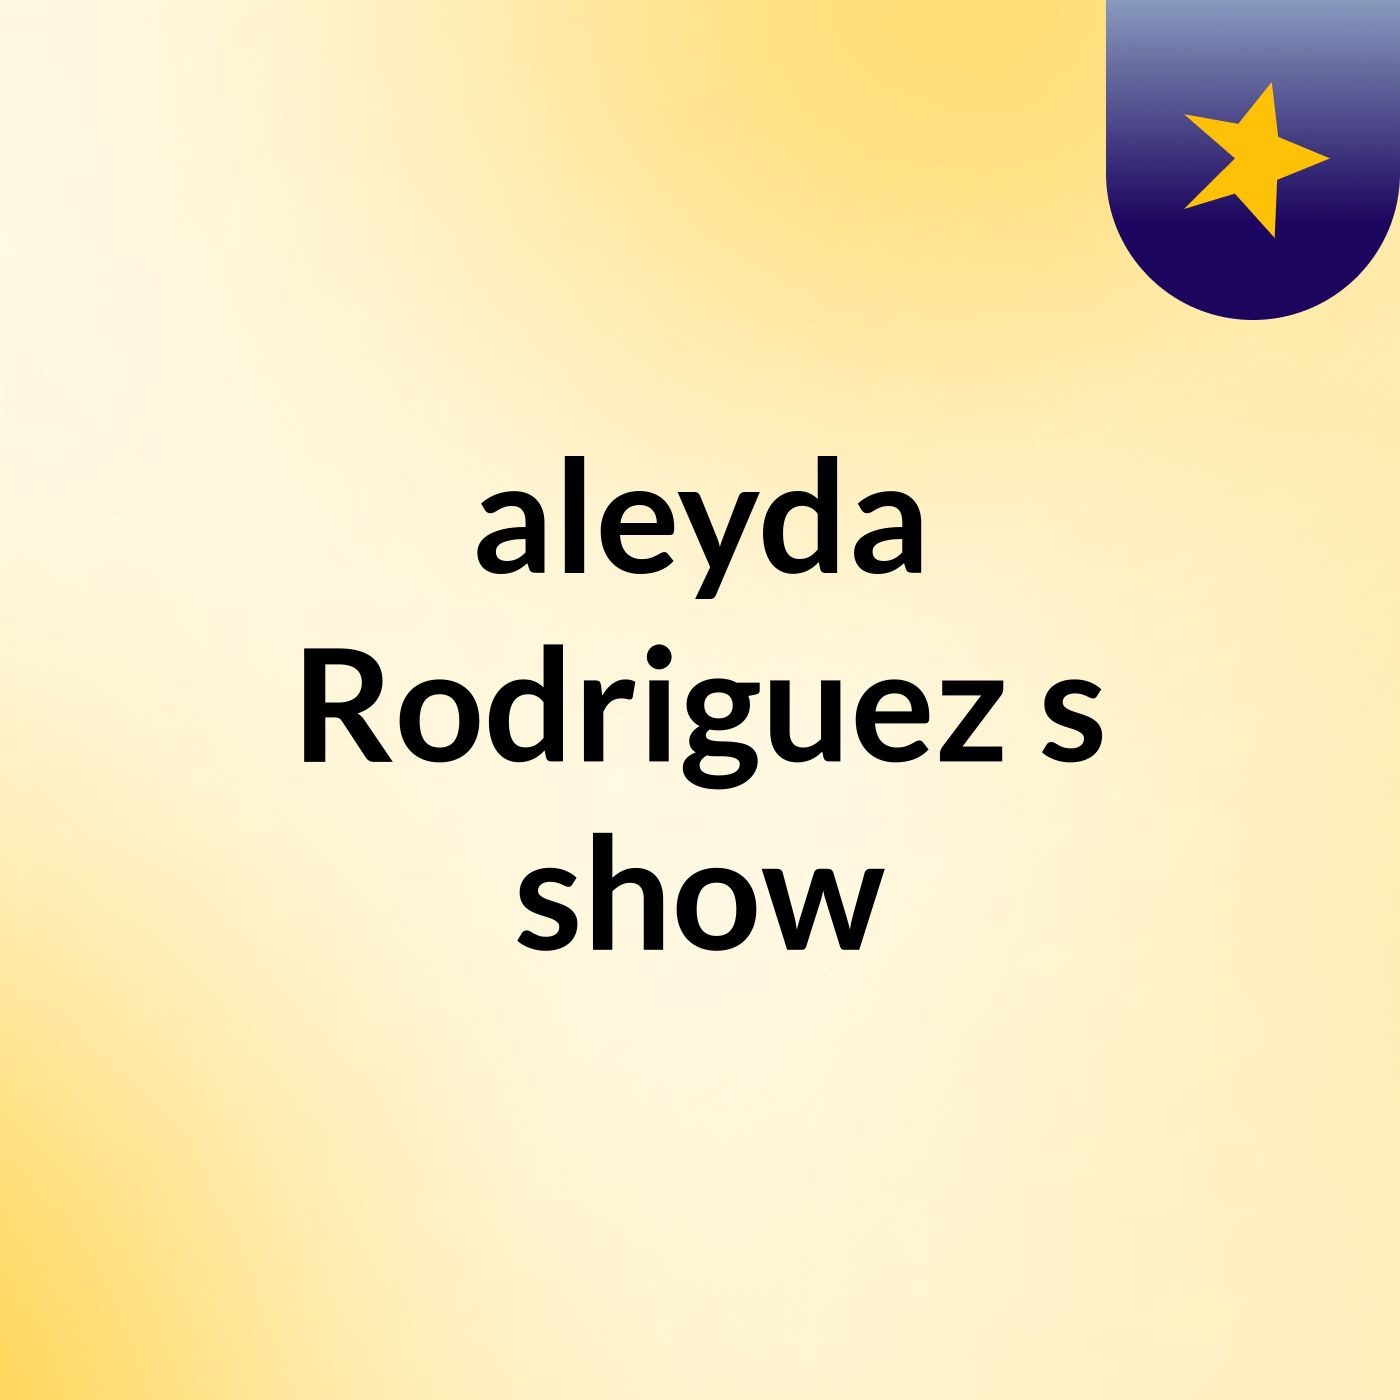 aleyda Rodriguez's show